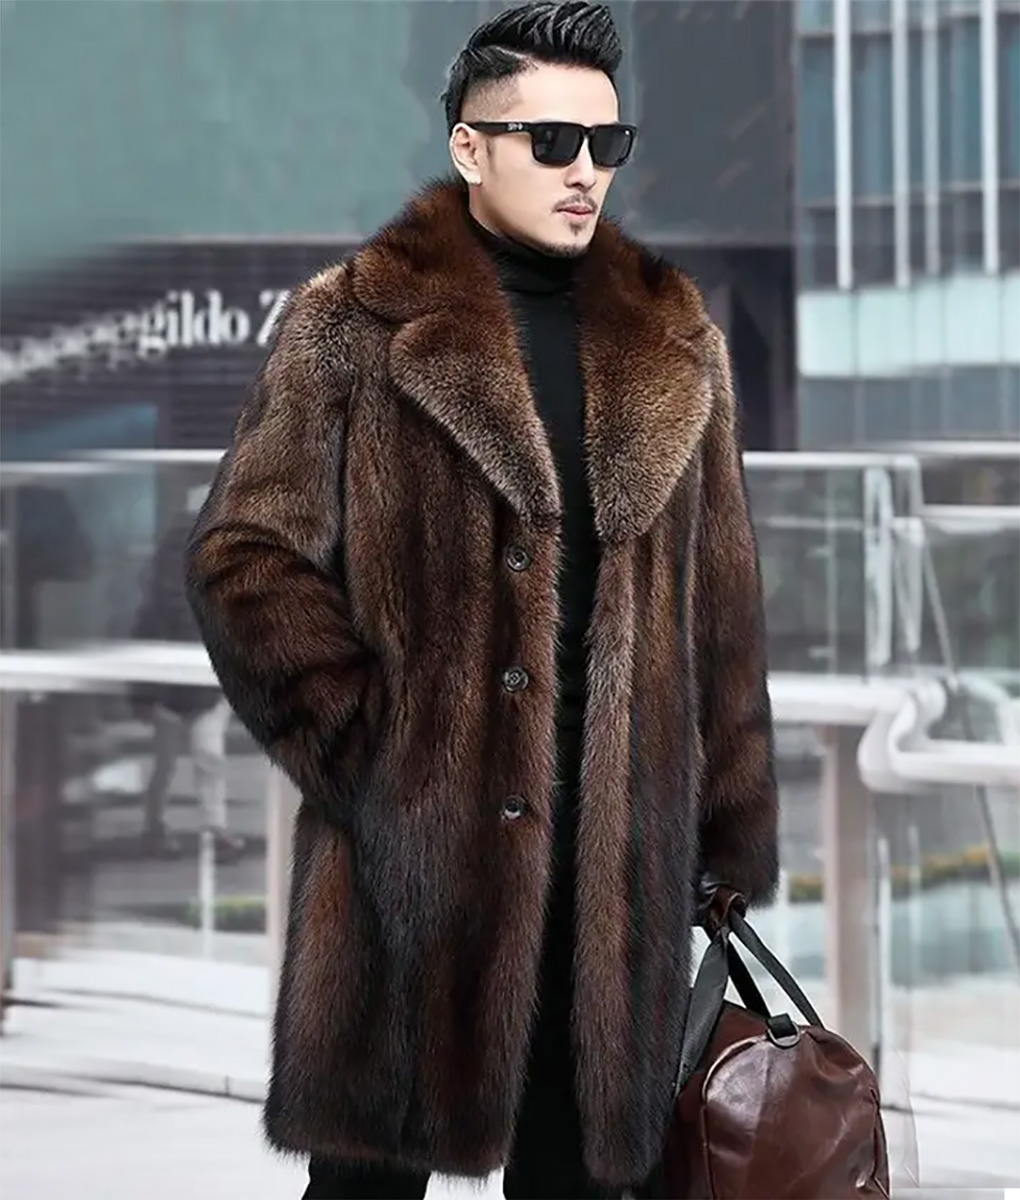 Men's Jaxon Faux Fur Brown Coat